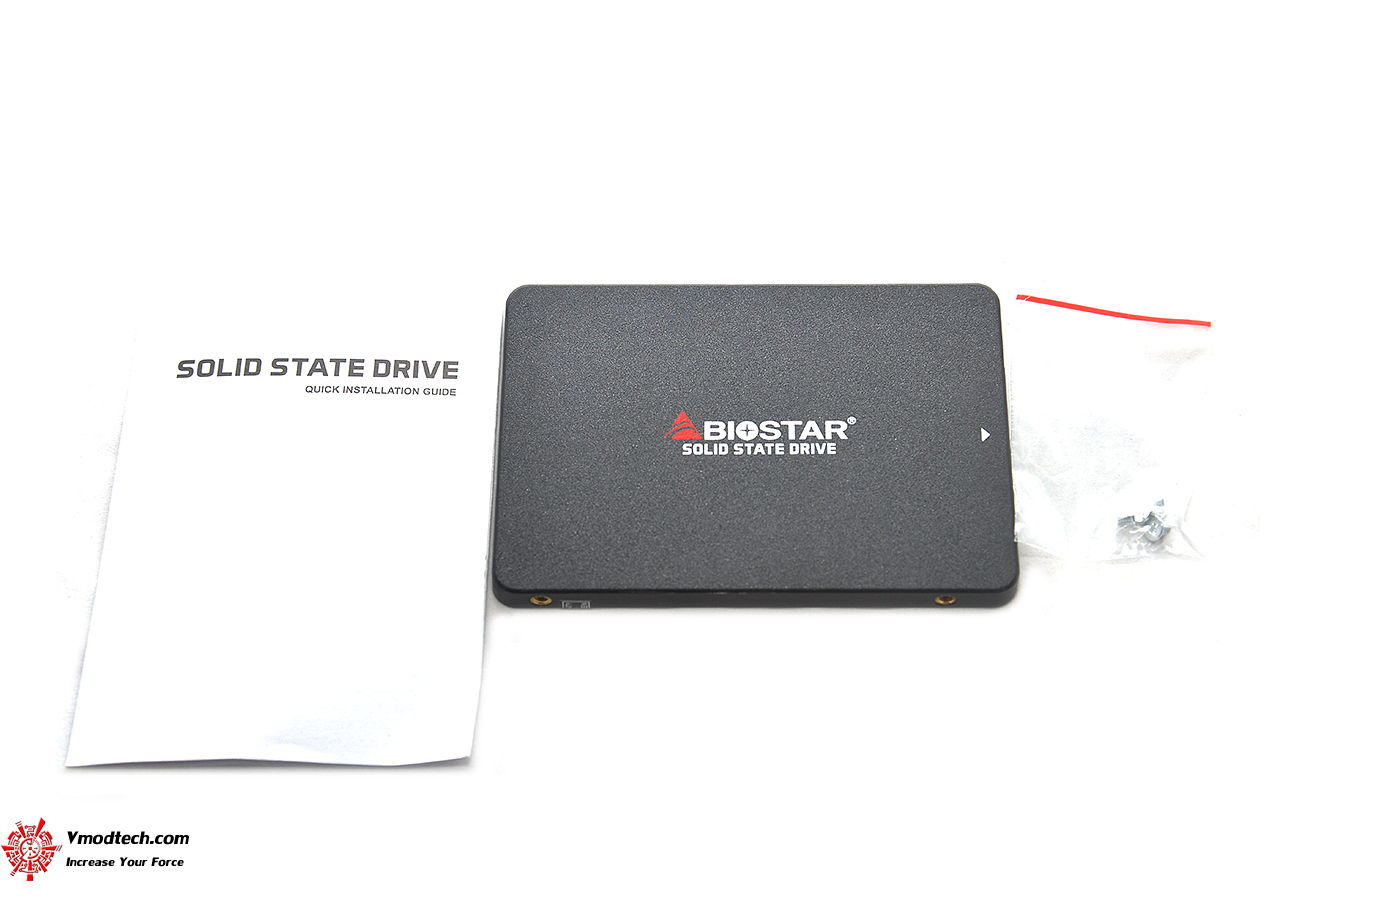 dsc 9913 Biostar SSD S130 512GB Review